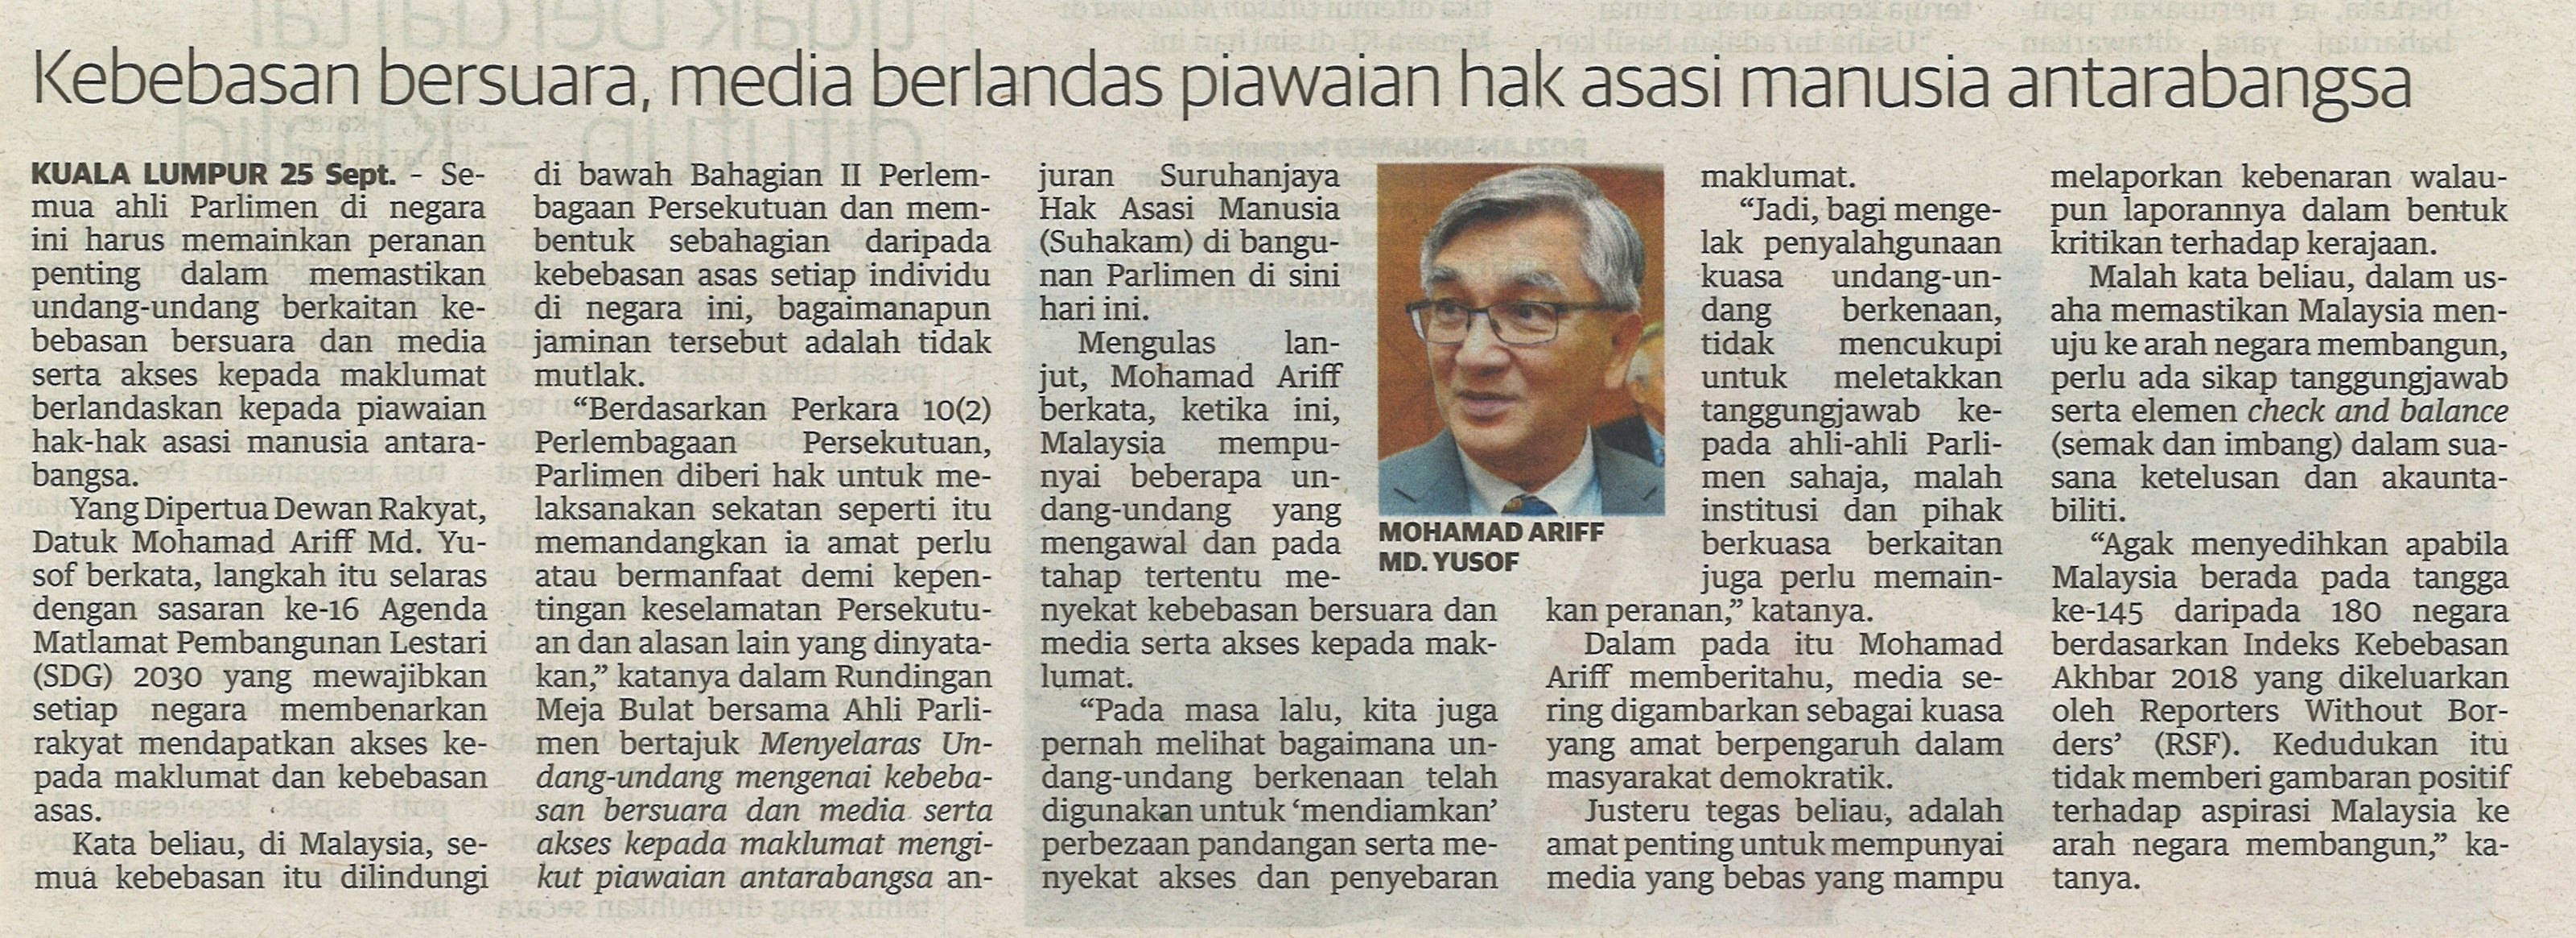 Artikel Surat Khabar Malaysia